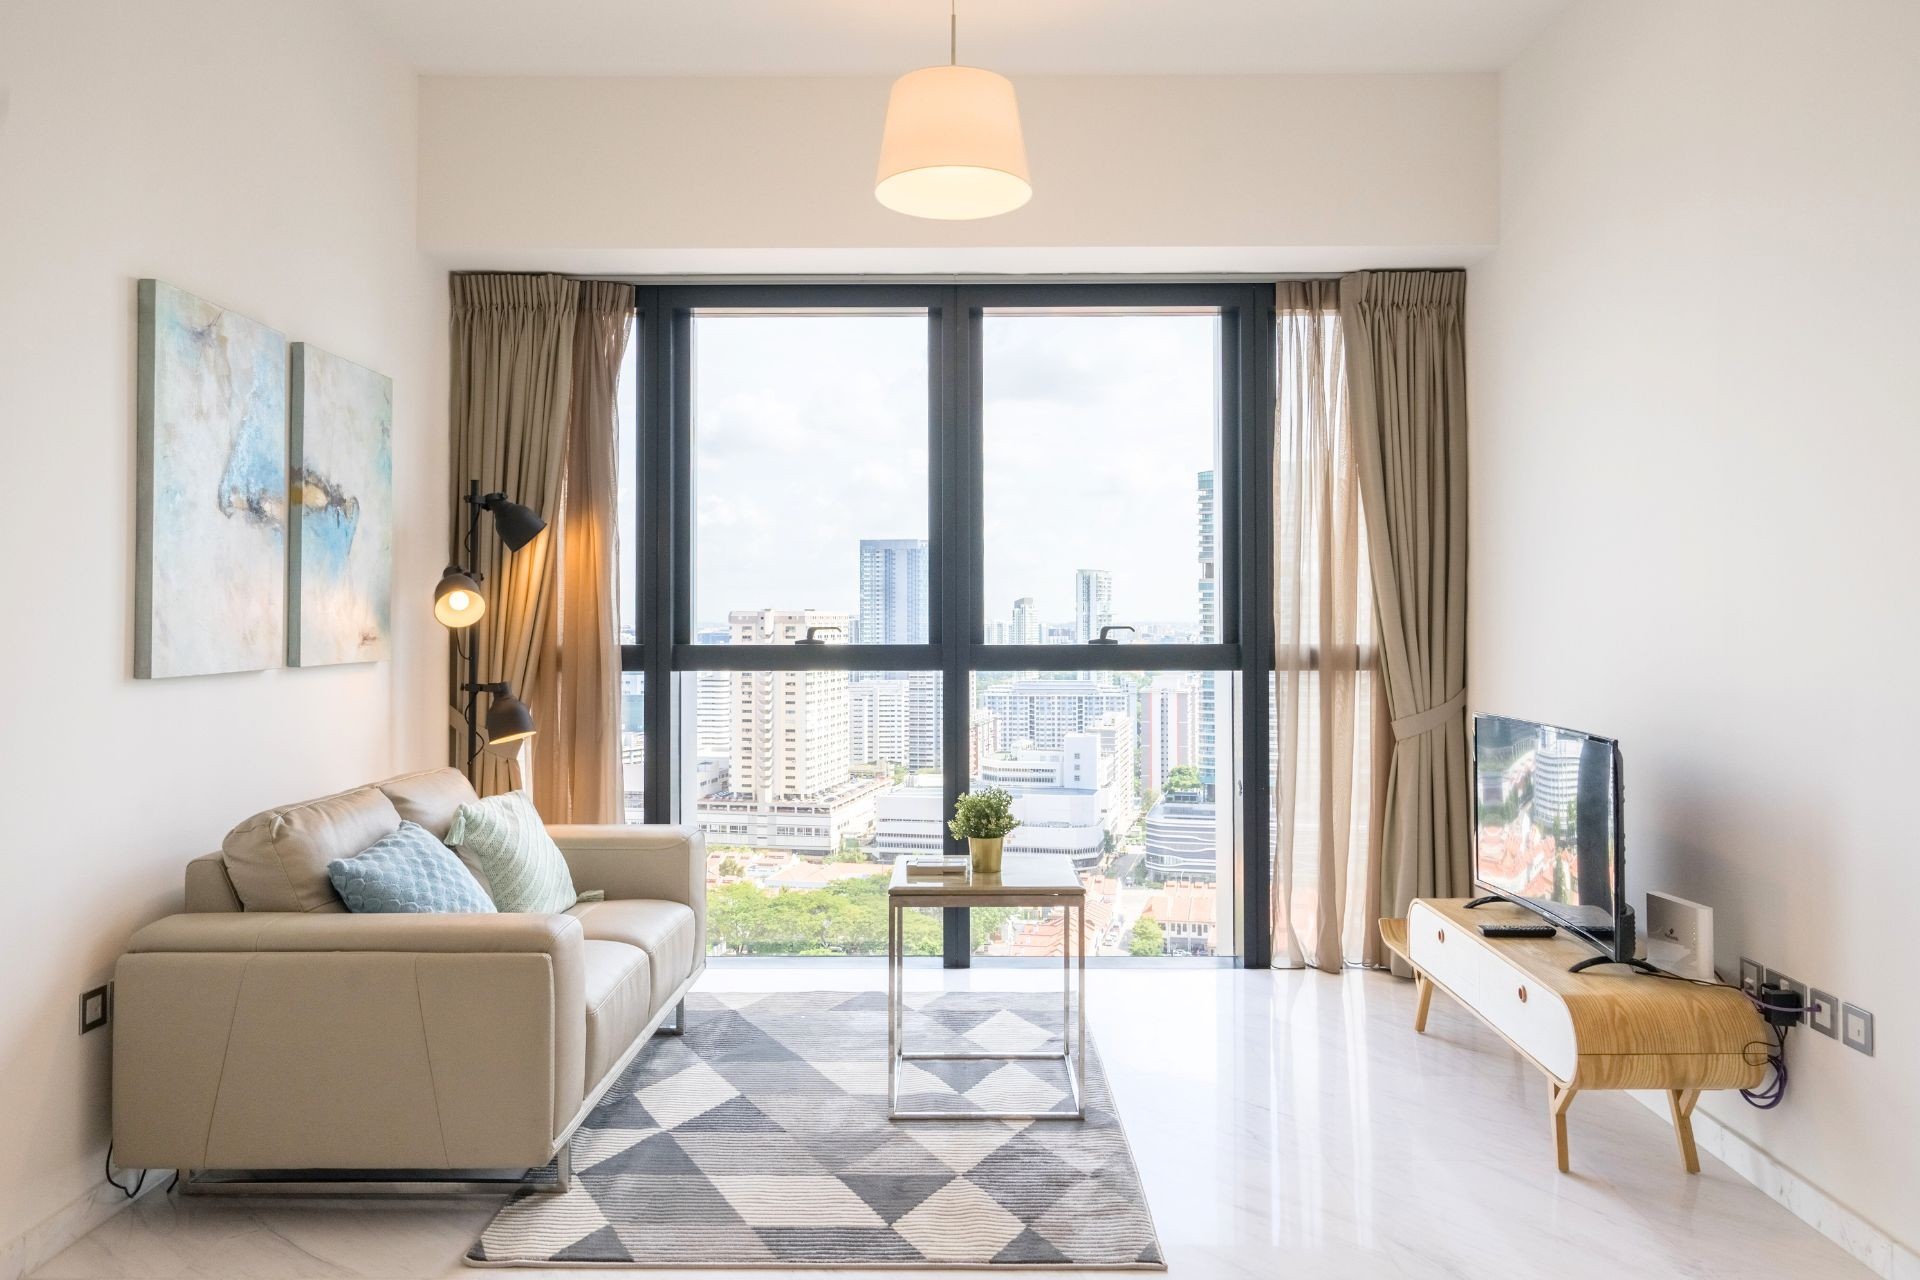 MetroResidences - Expat Life - singapore serviced apartments - accommodation rental singapore monthl